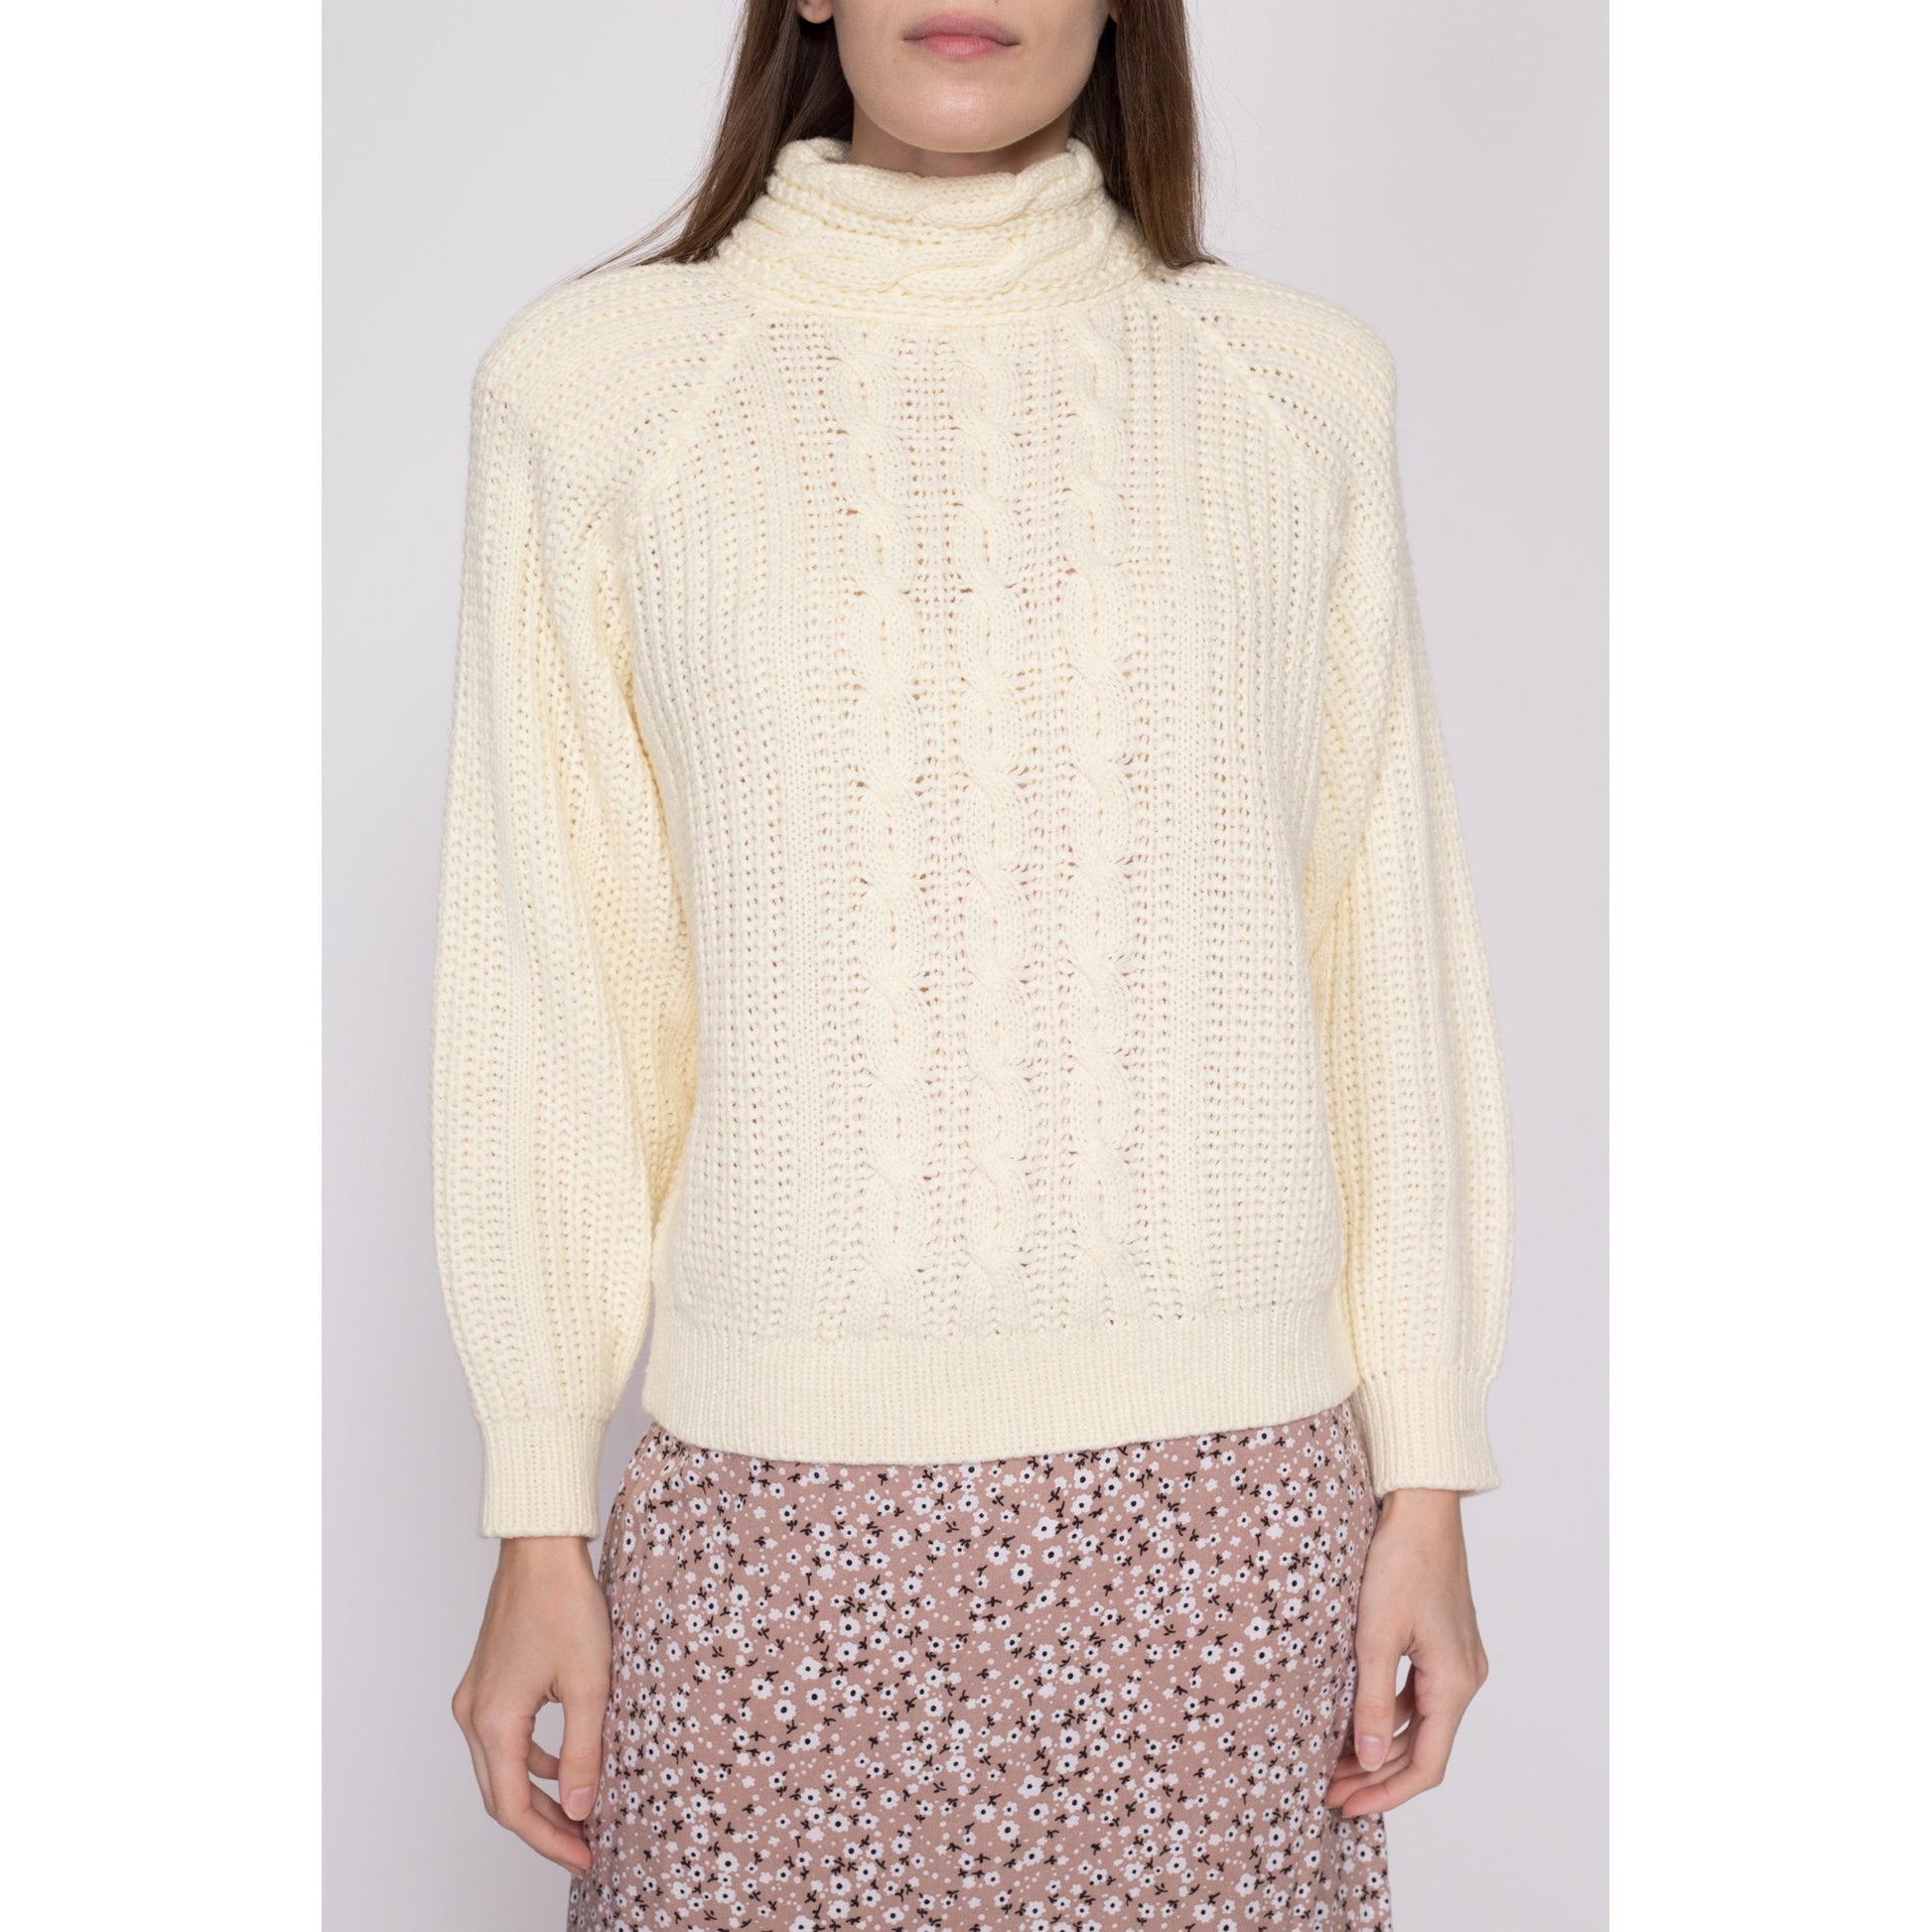 Medium 80s Cable Knit Turtleneck Sweater | Vintage Cream Knit Pullover Jumper